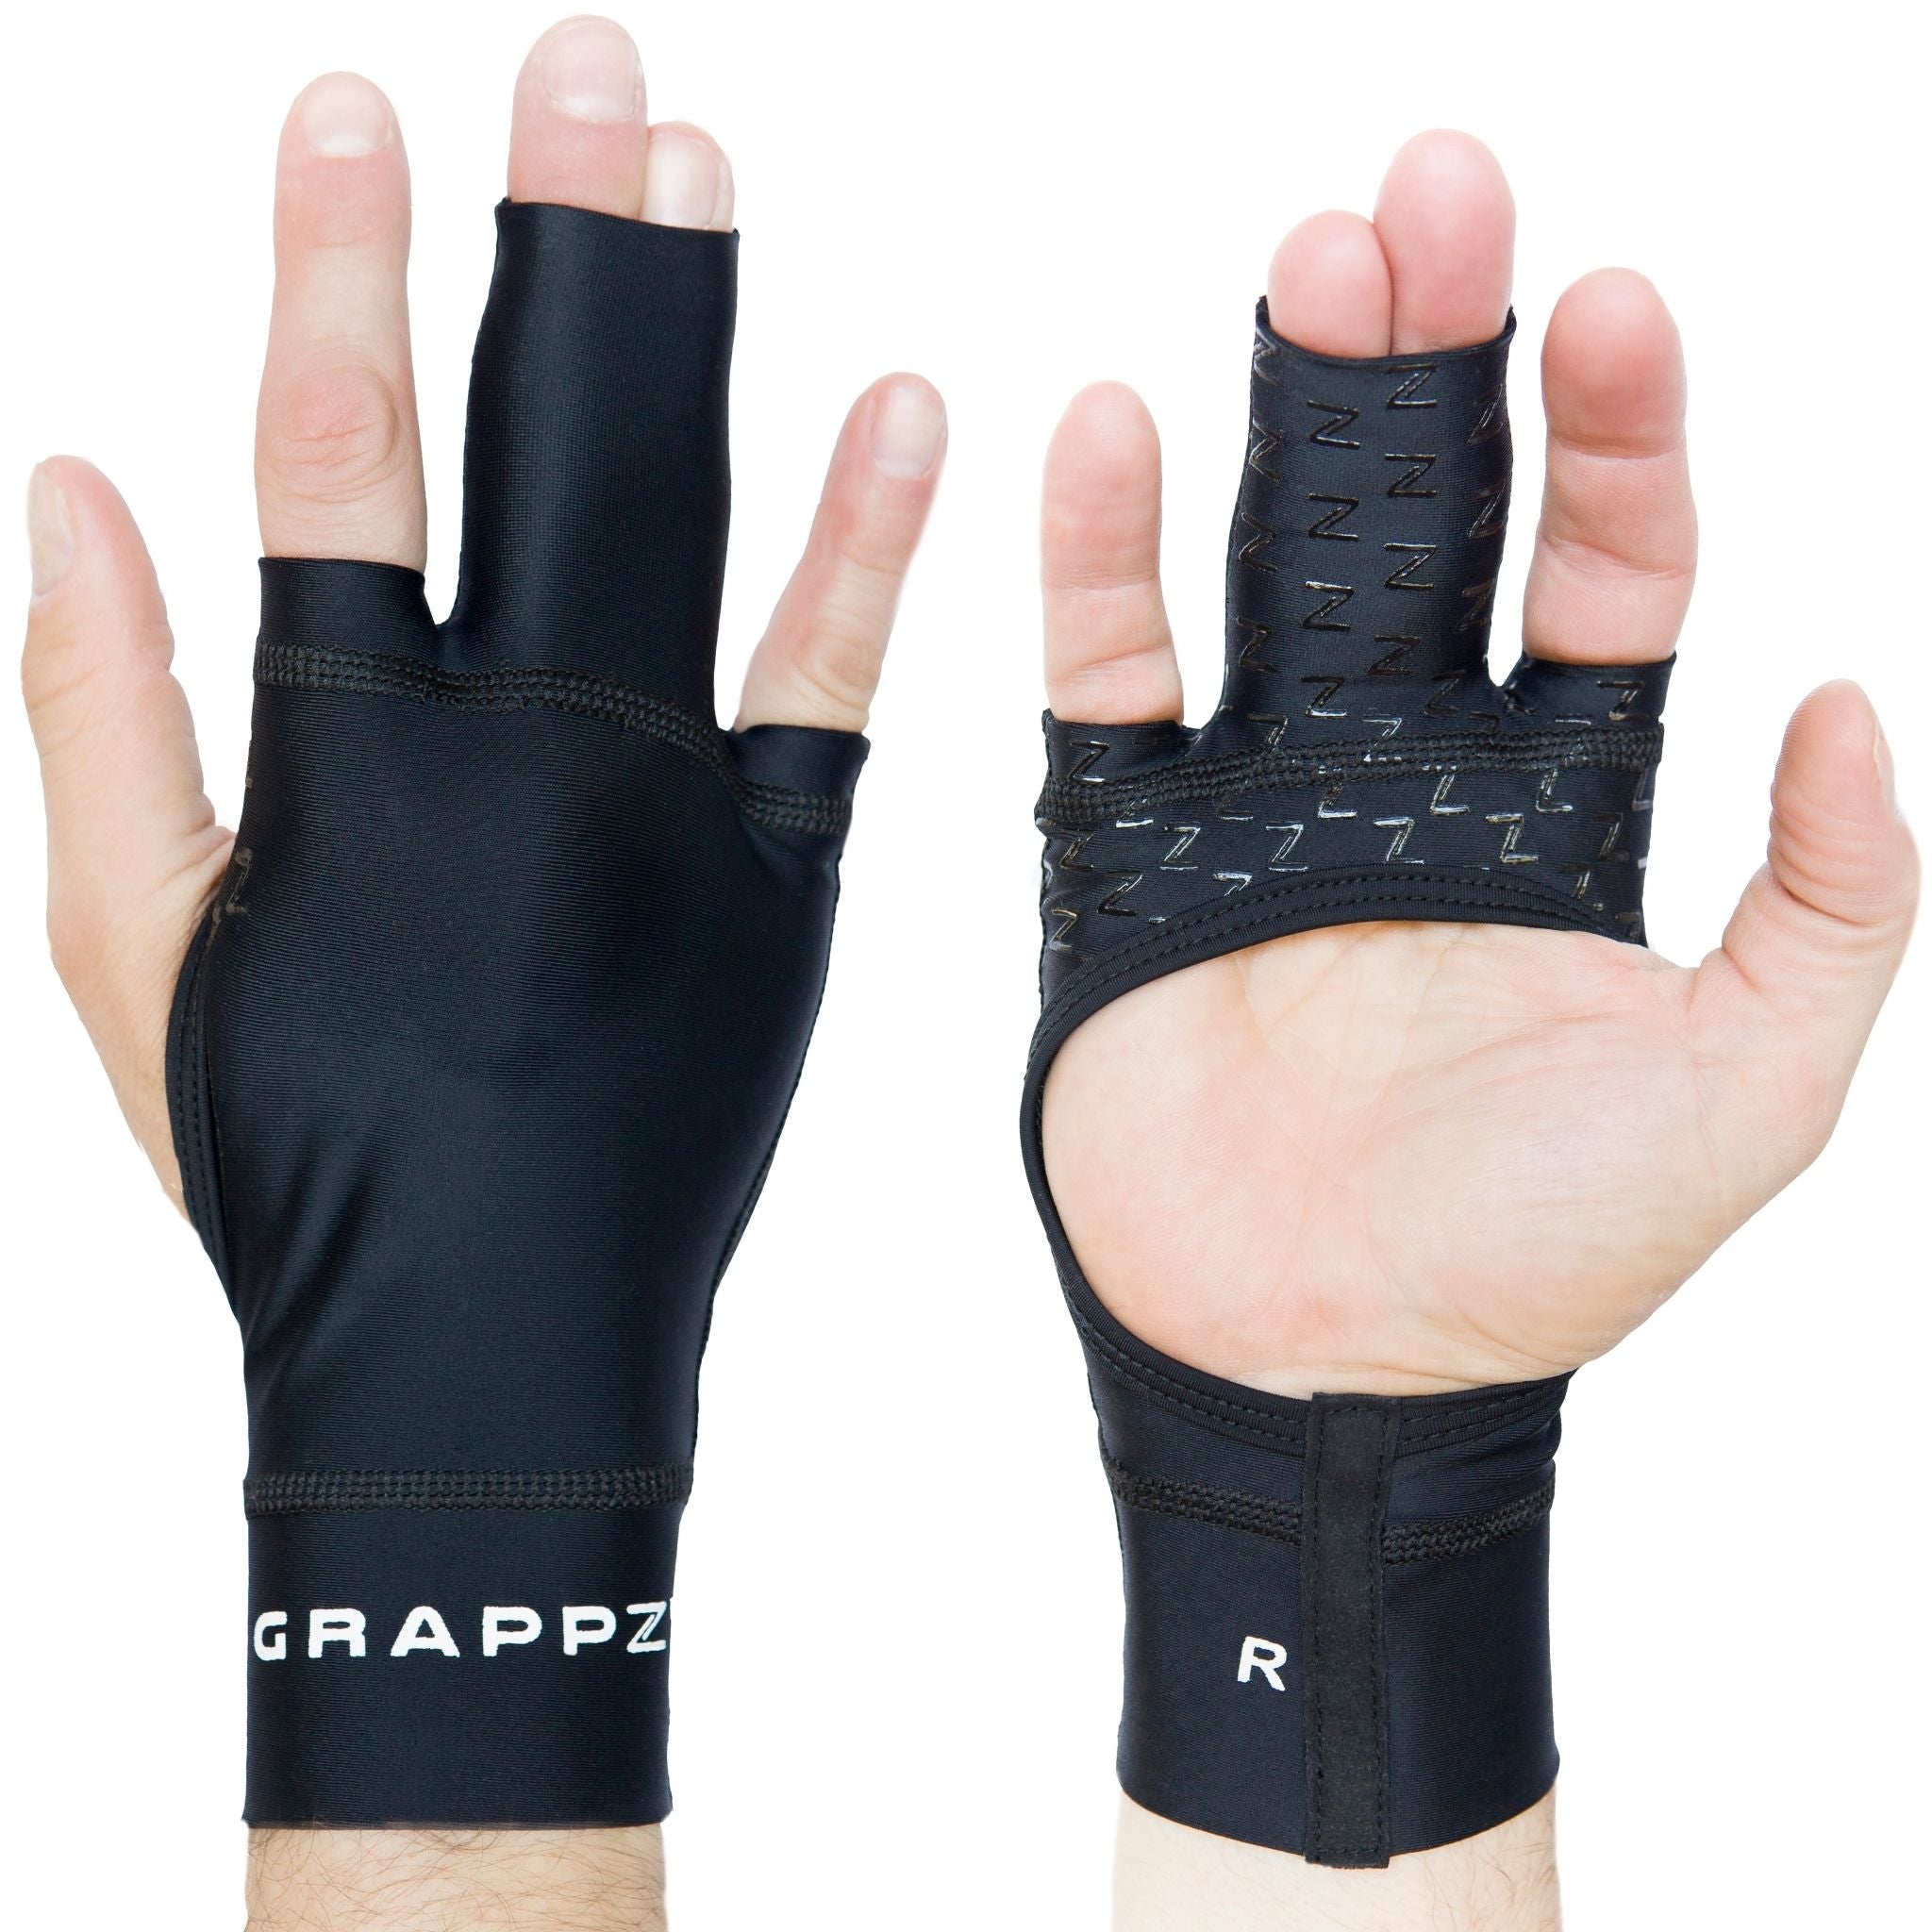 Finger Support Compression glove improves strength & performance